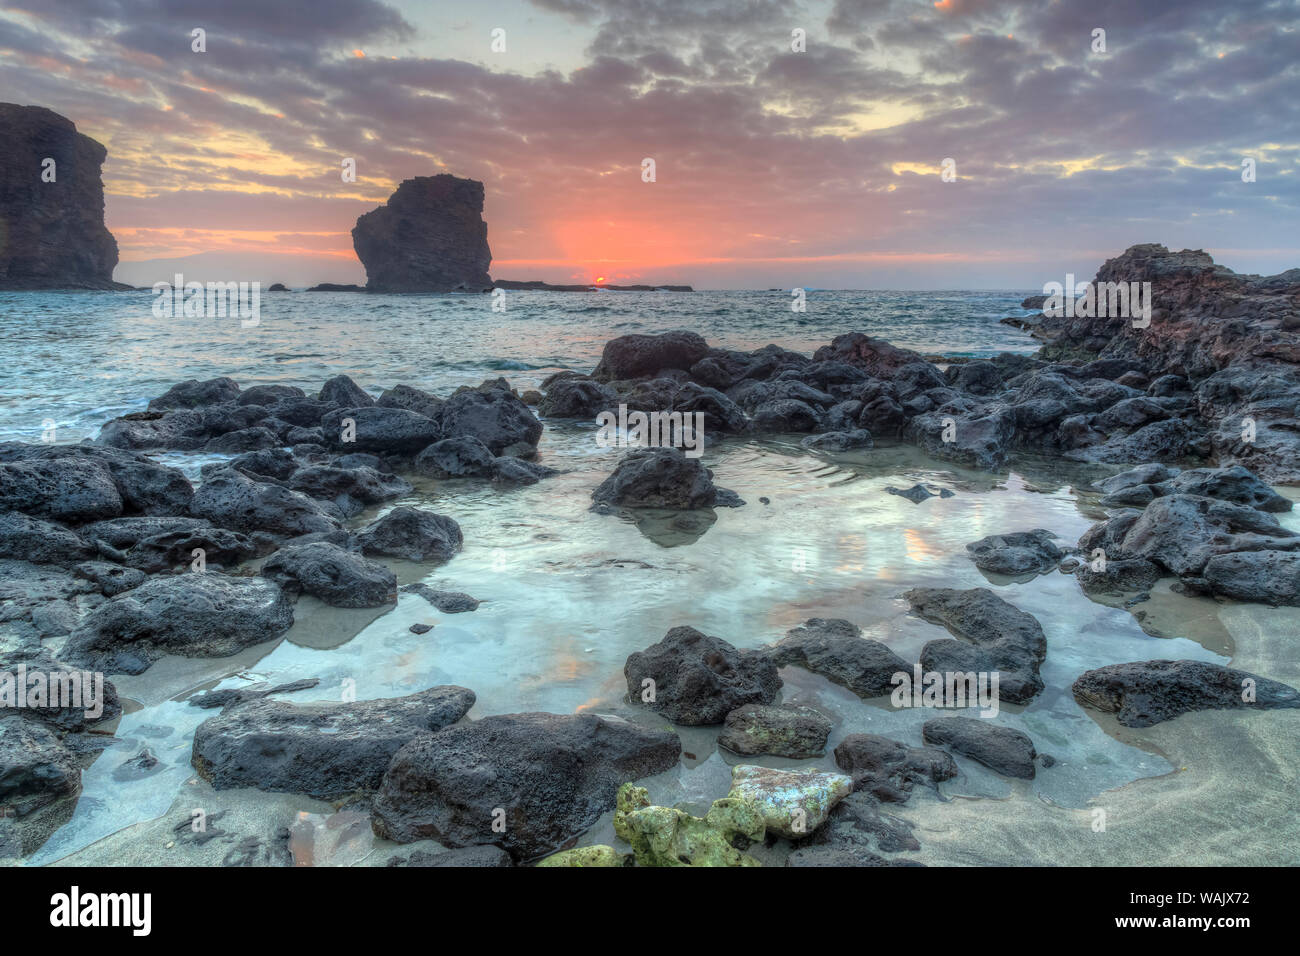 View from beach at Manele Bay of Puu Pehe (Sweetheart Rock) at sunrise, South Shore of Lanai Island, Hawaii, USA Stock Photo